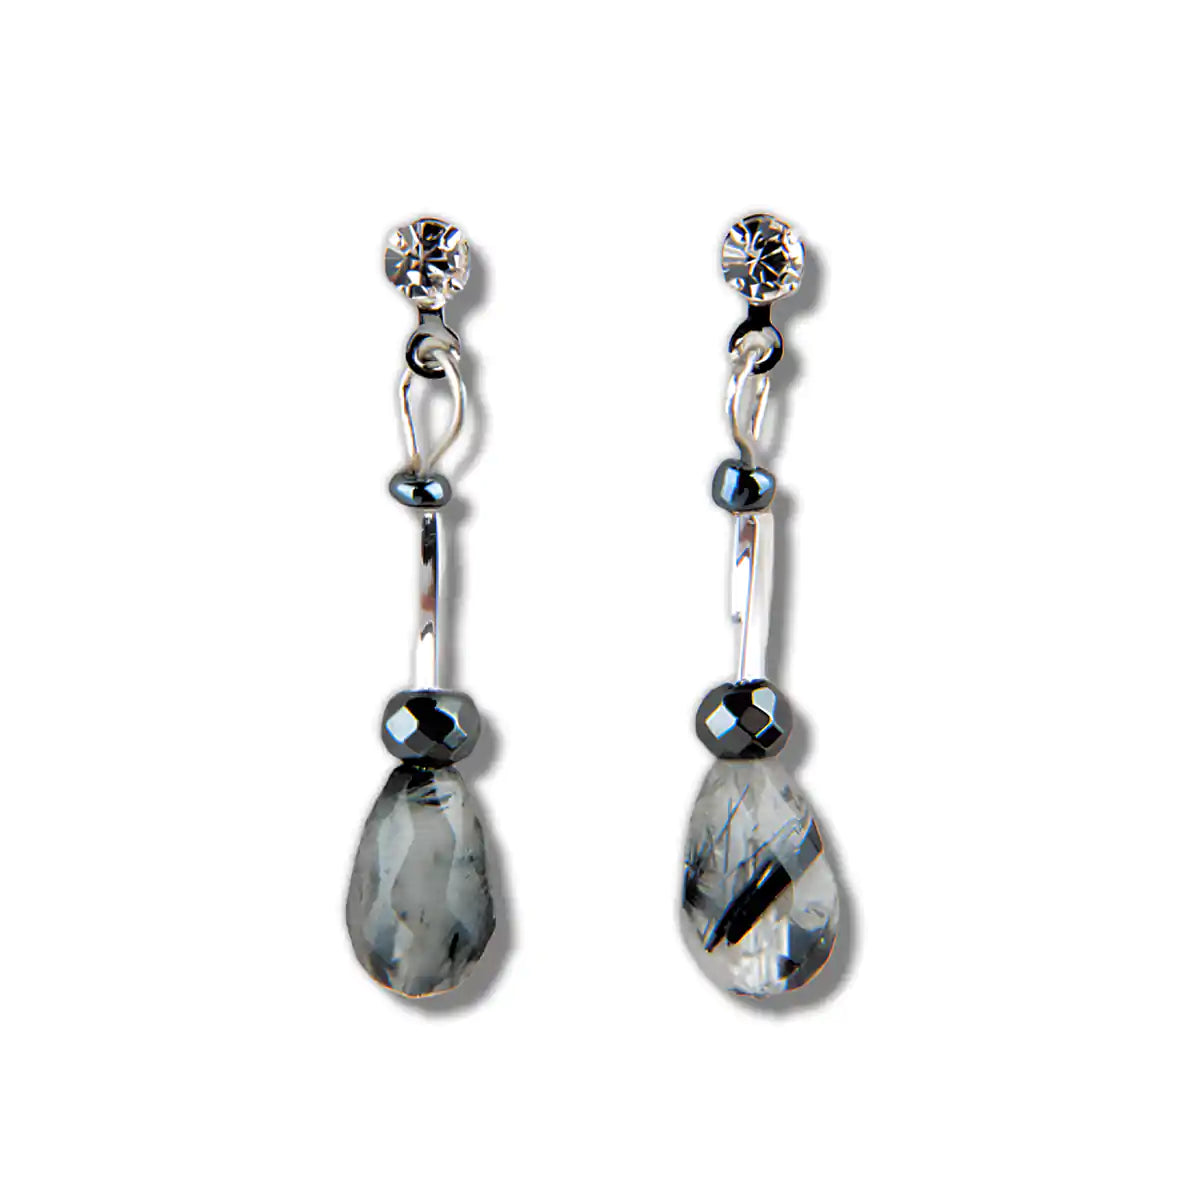 Hematite dainty quartz drop earrings